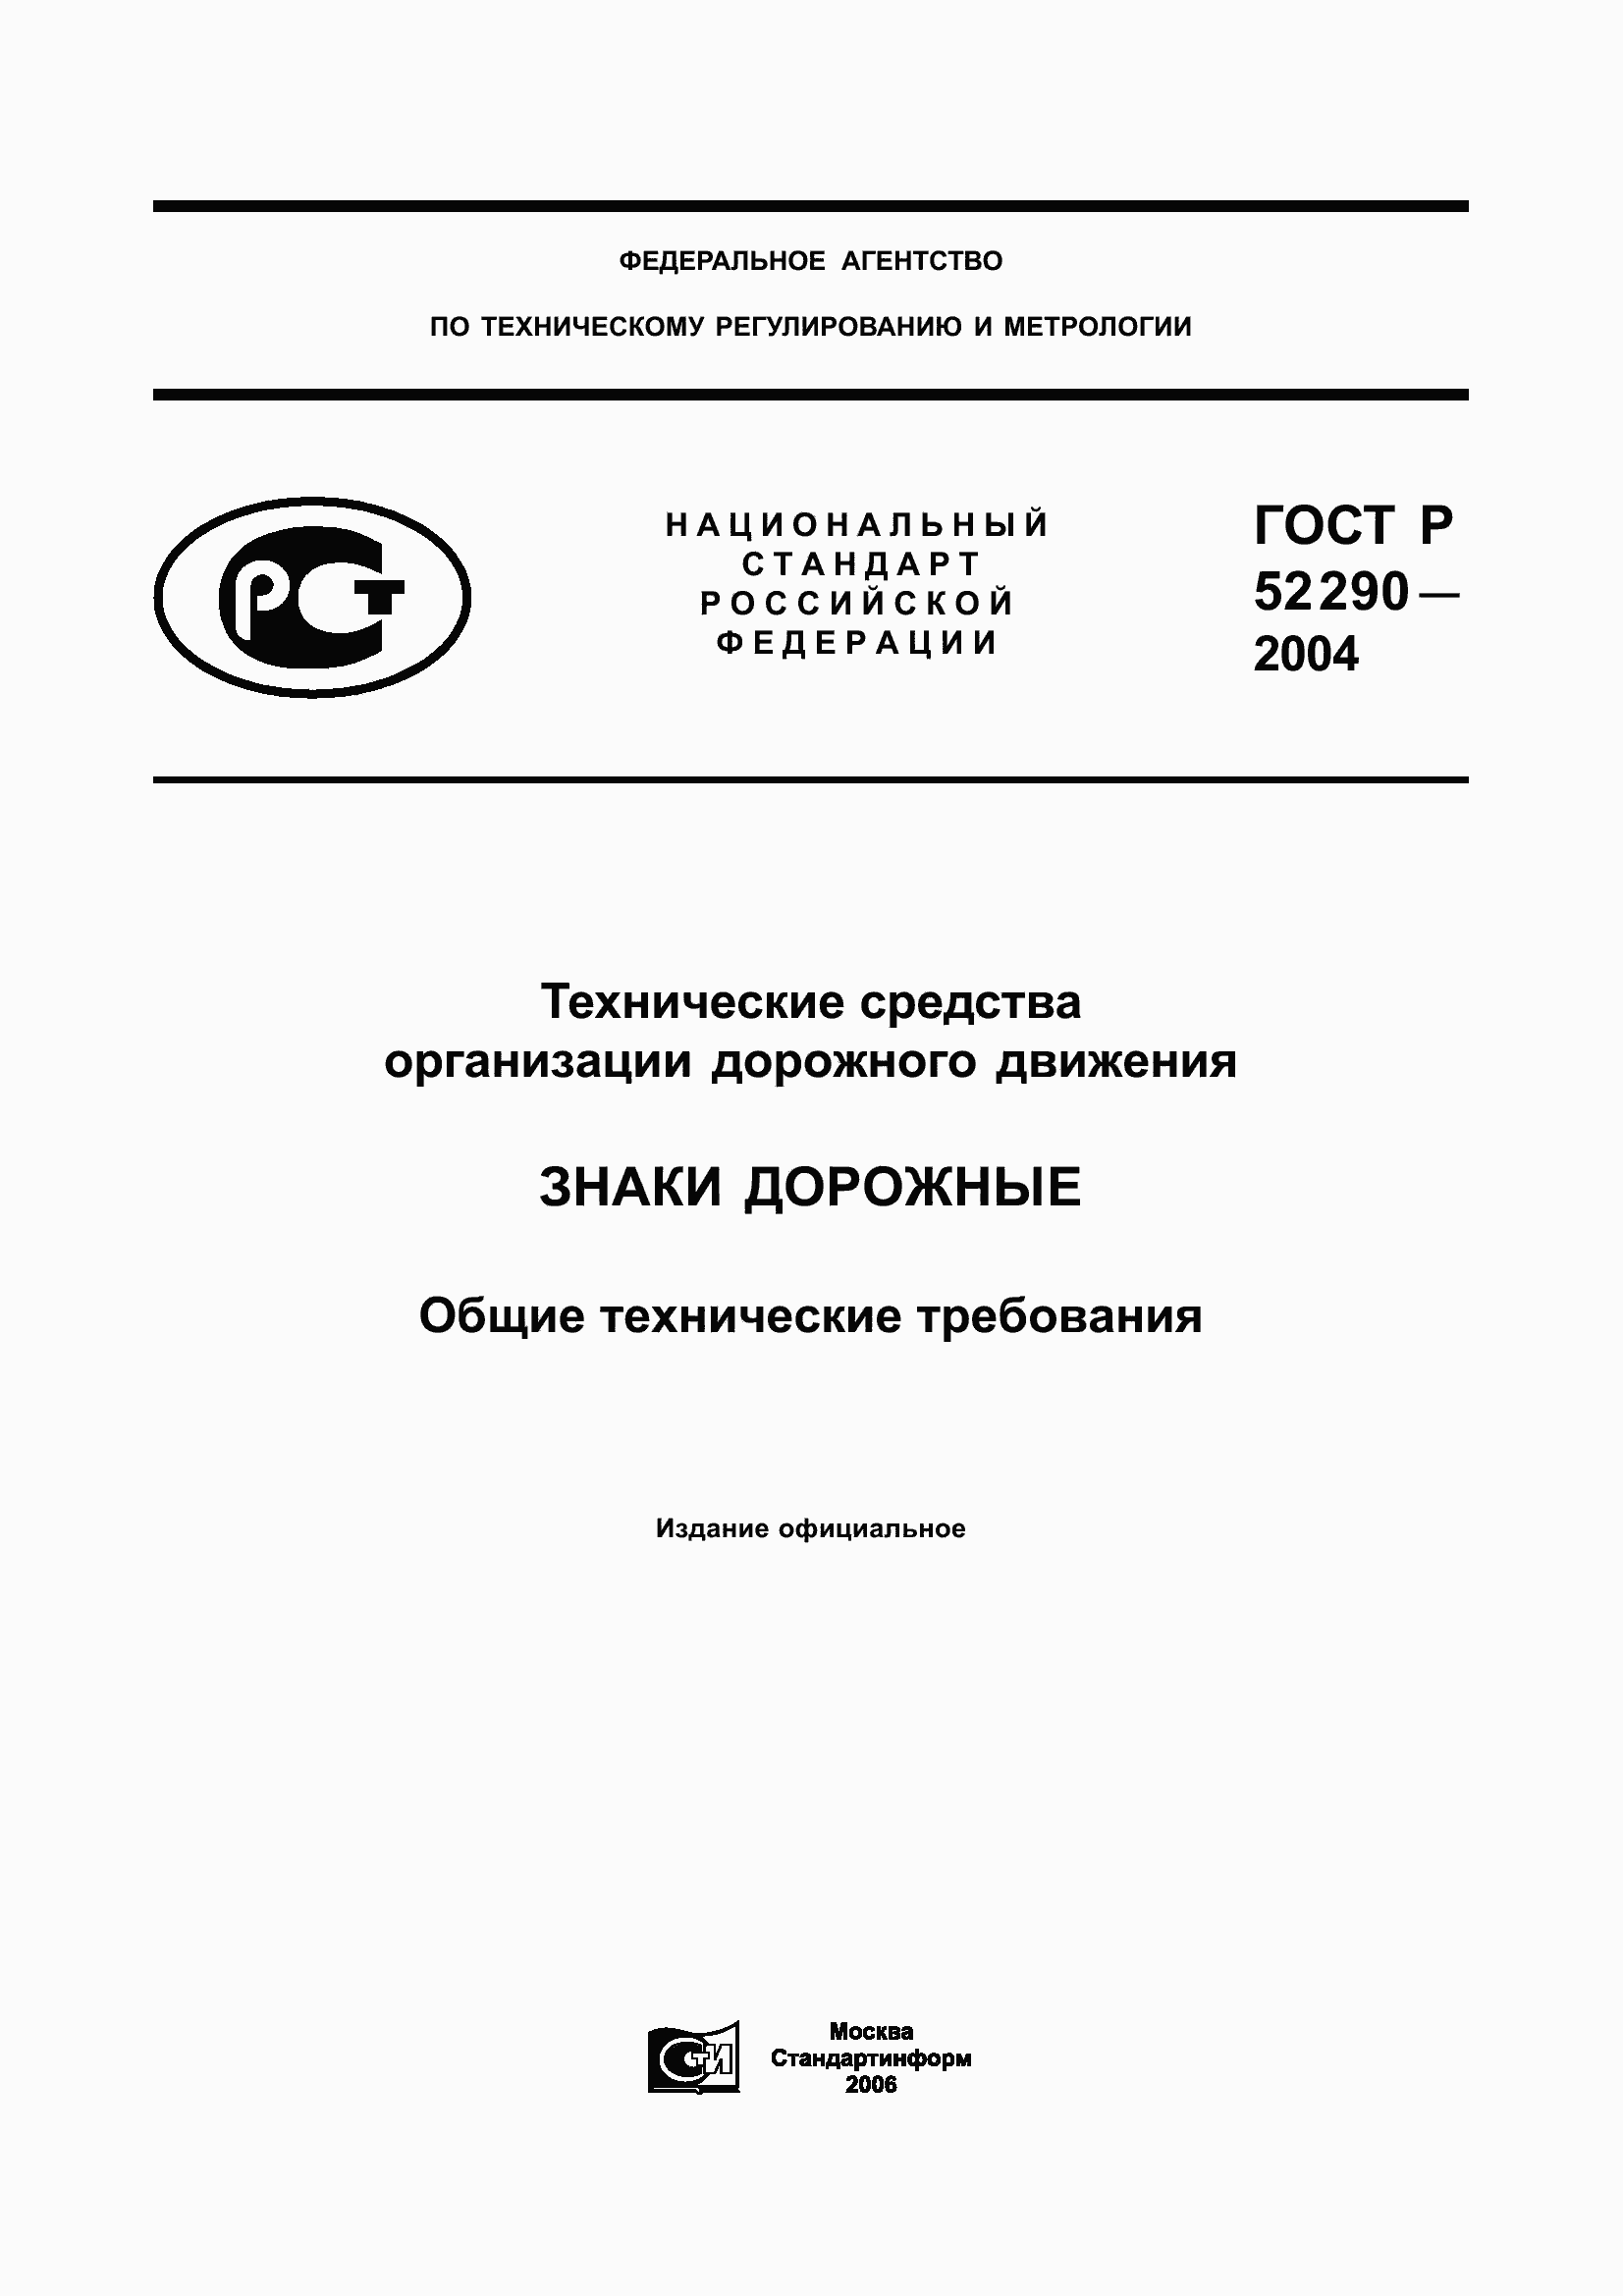 ГОСТ Р 52290-2004. Страница 1